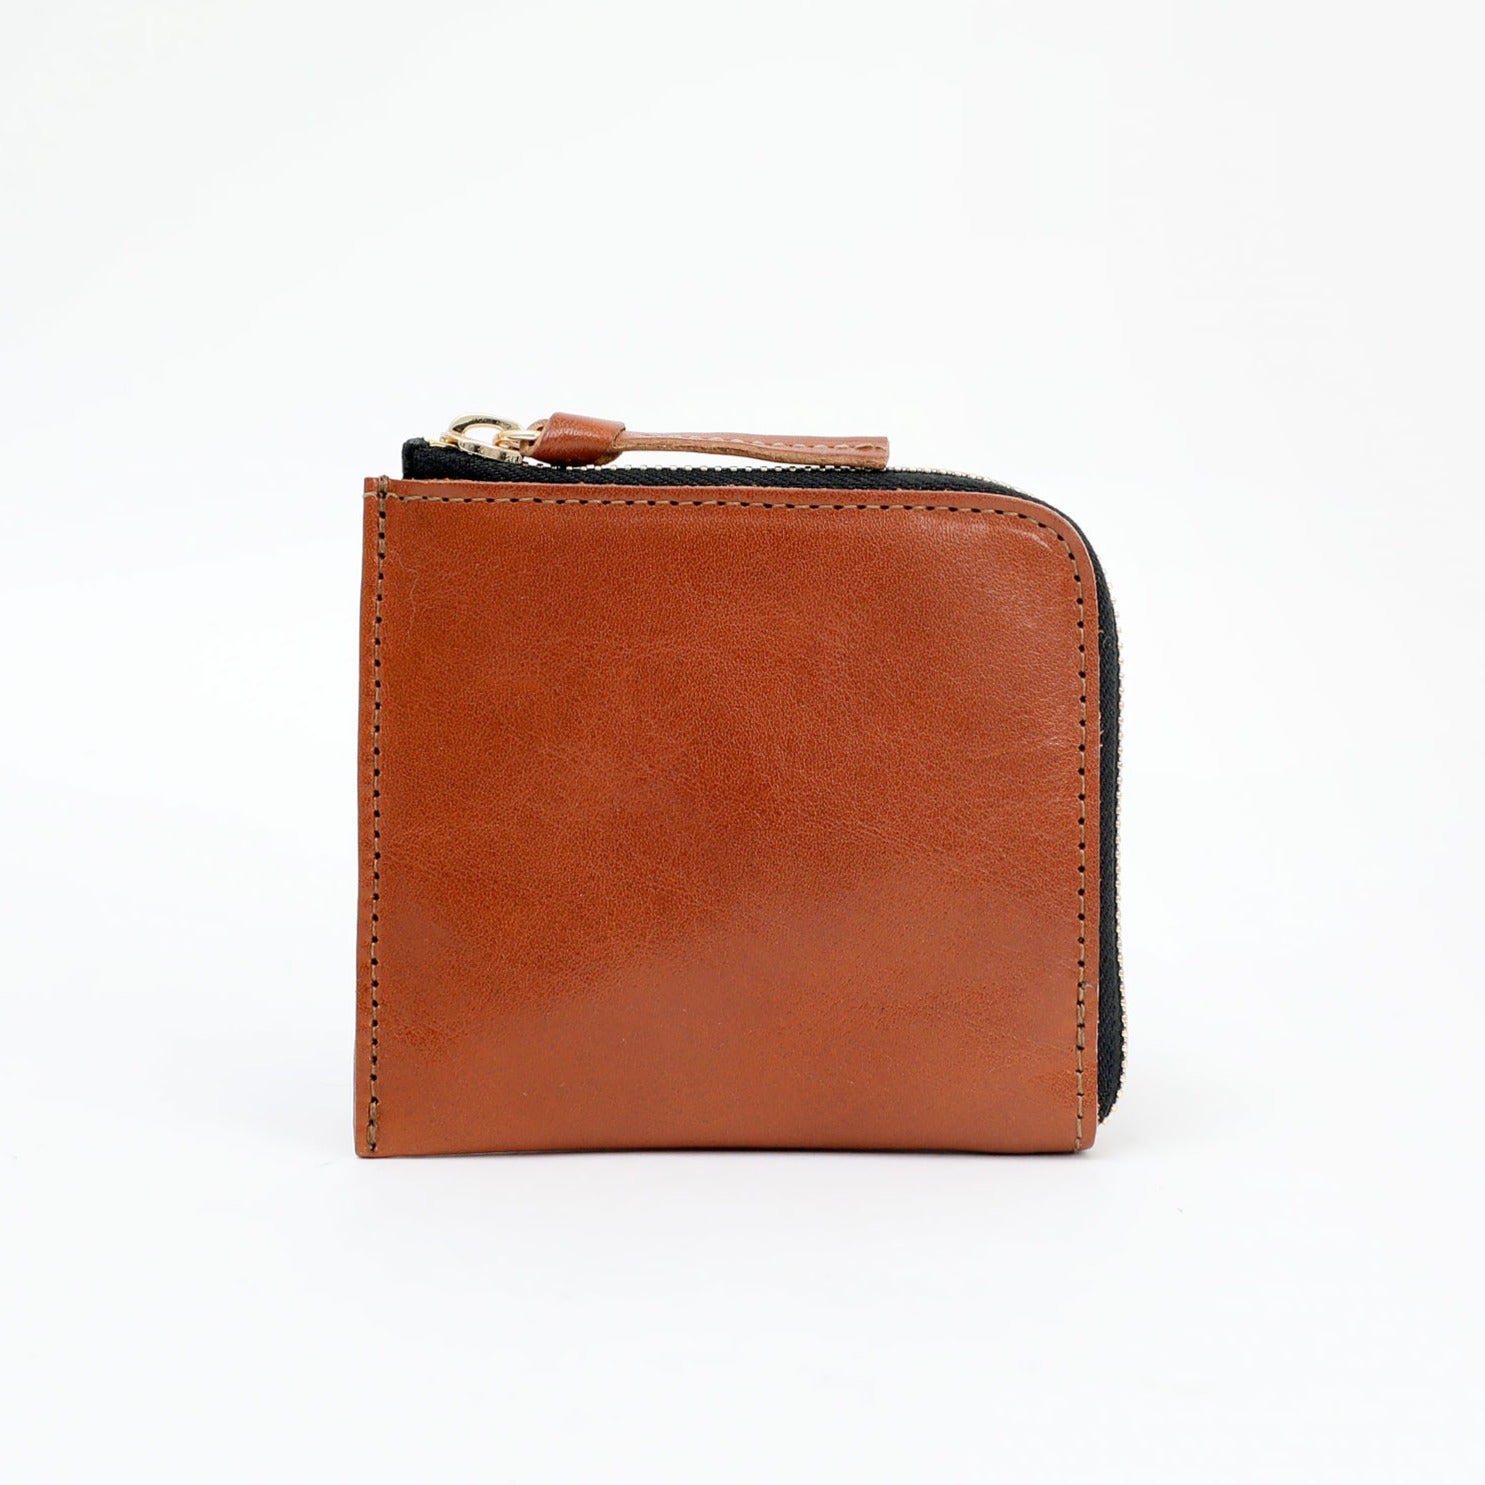 Clare V. Half Leather Zip Wallet